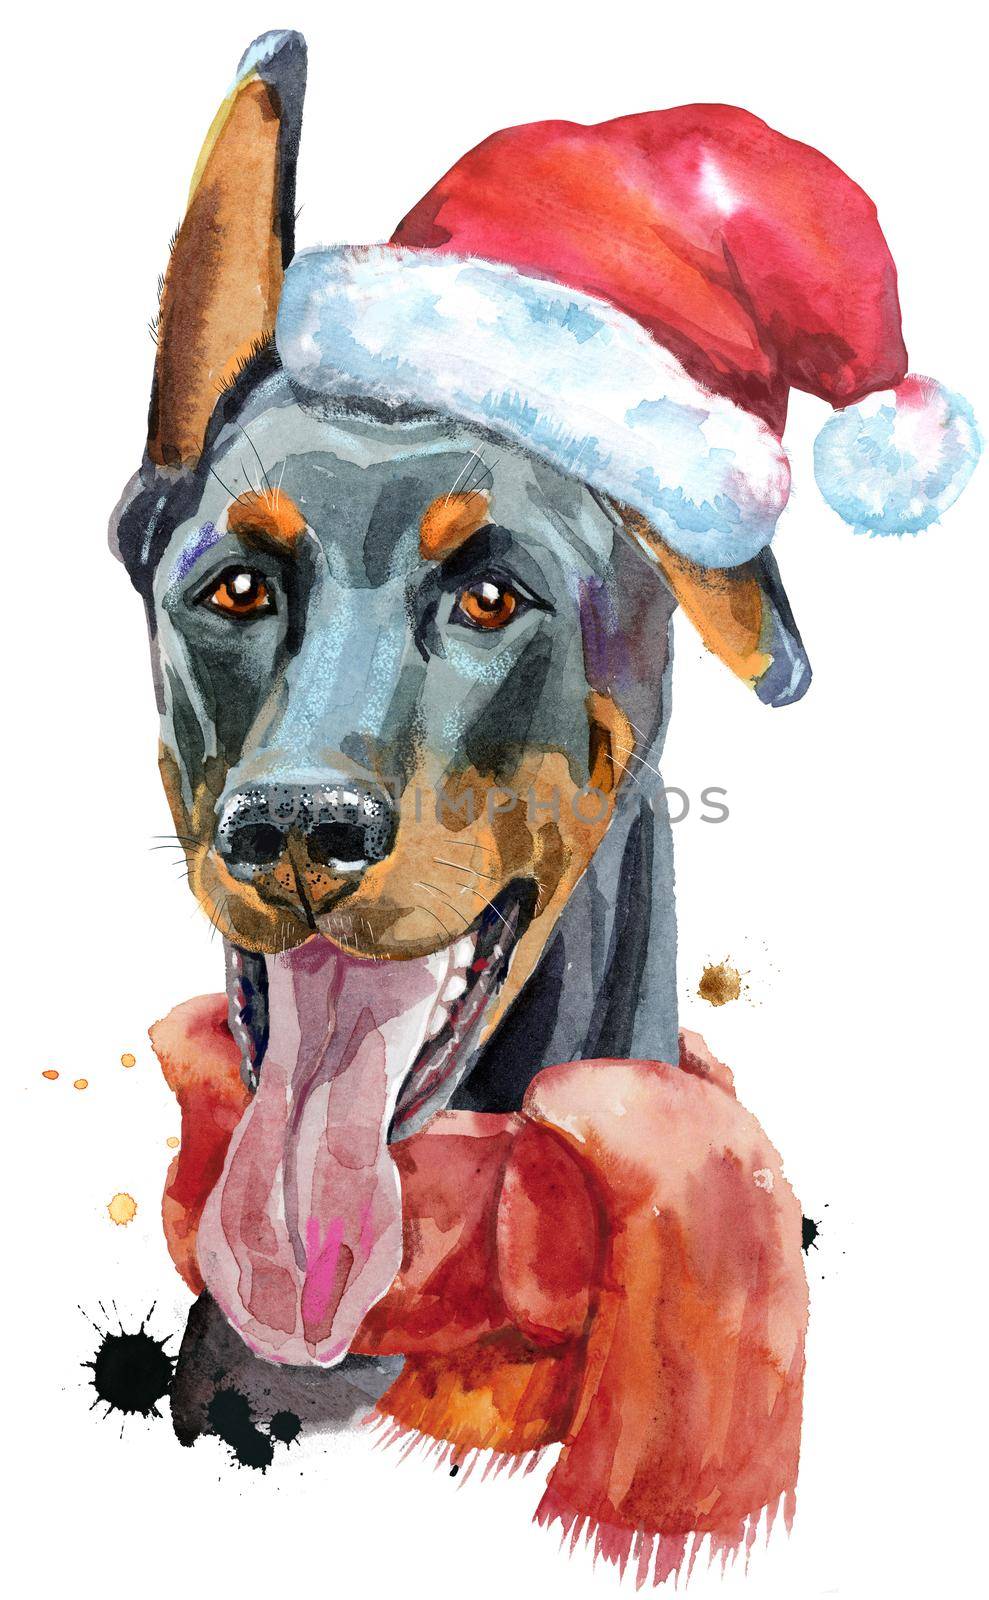 Cute Dog. Dog T-shirt graphics. watercolor doberman illustration with Santa hat